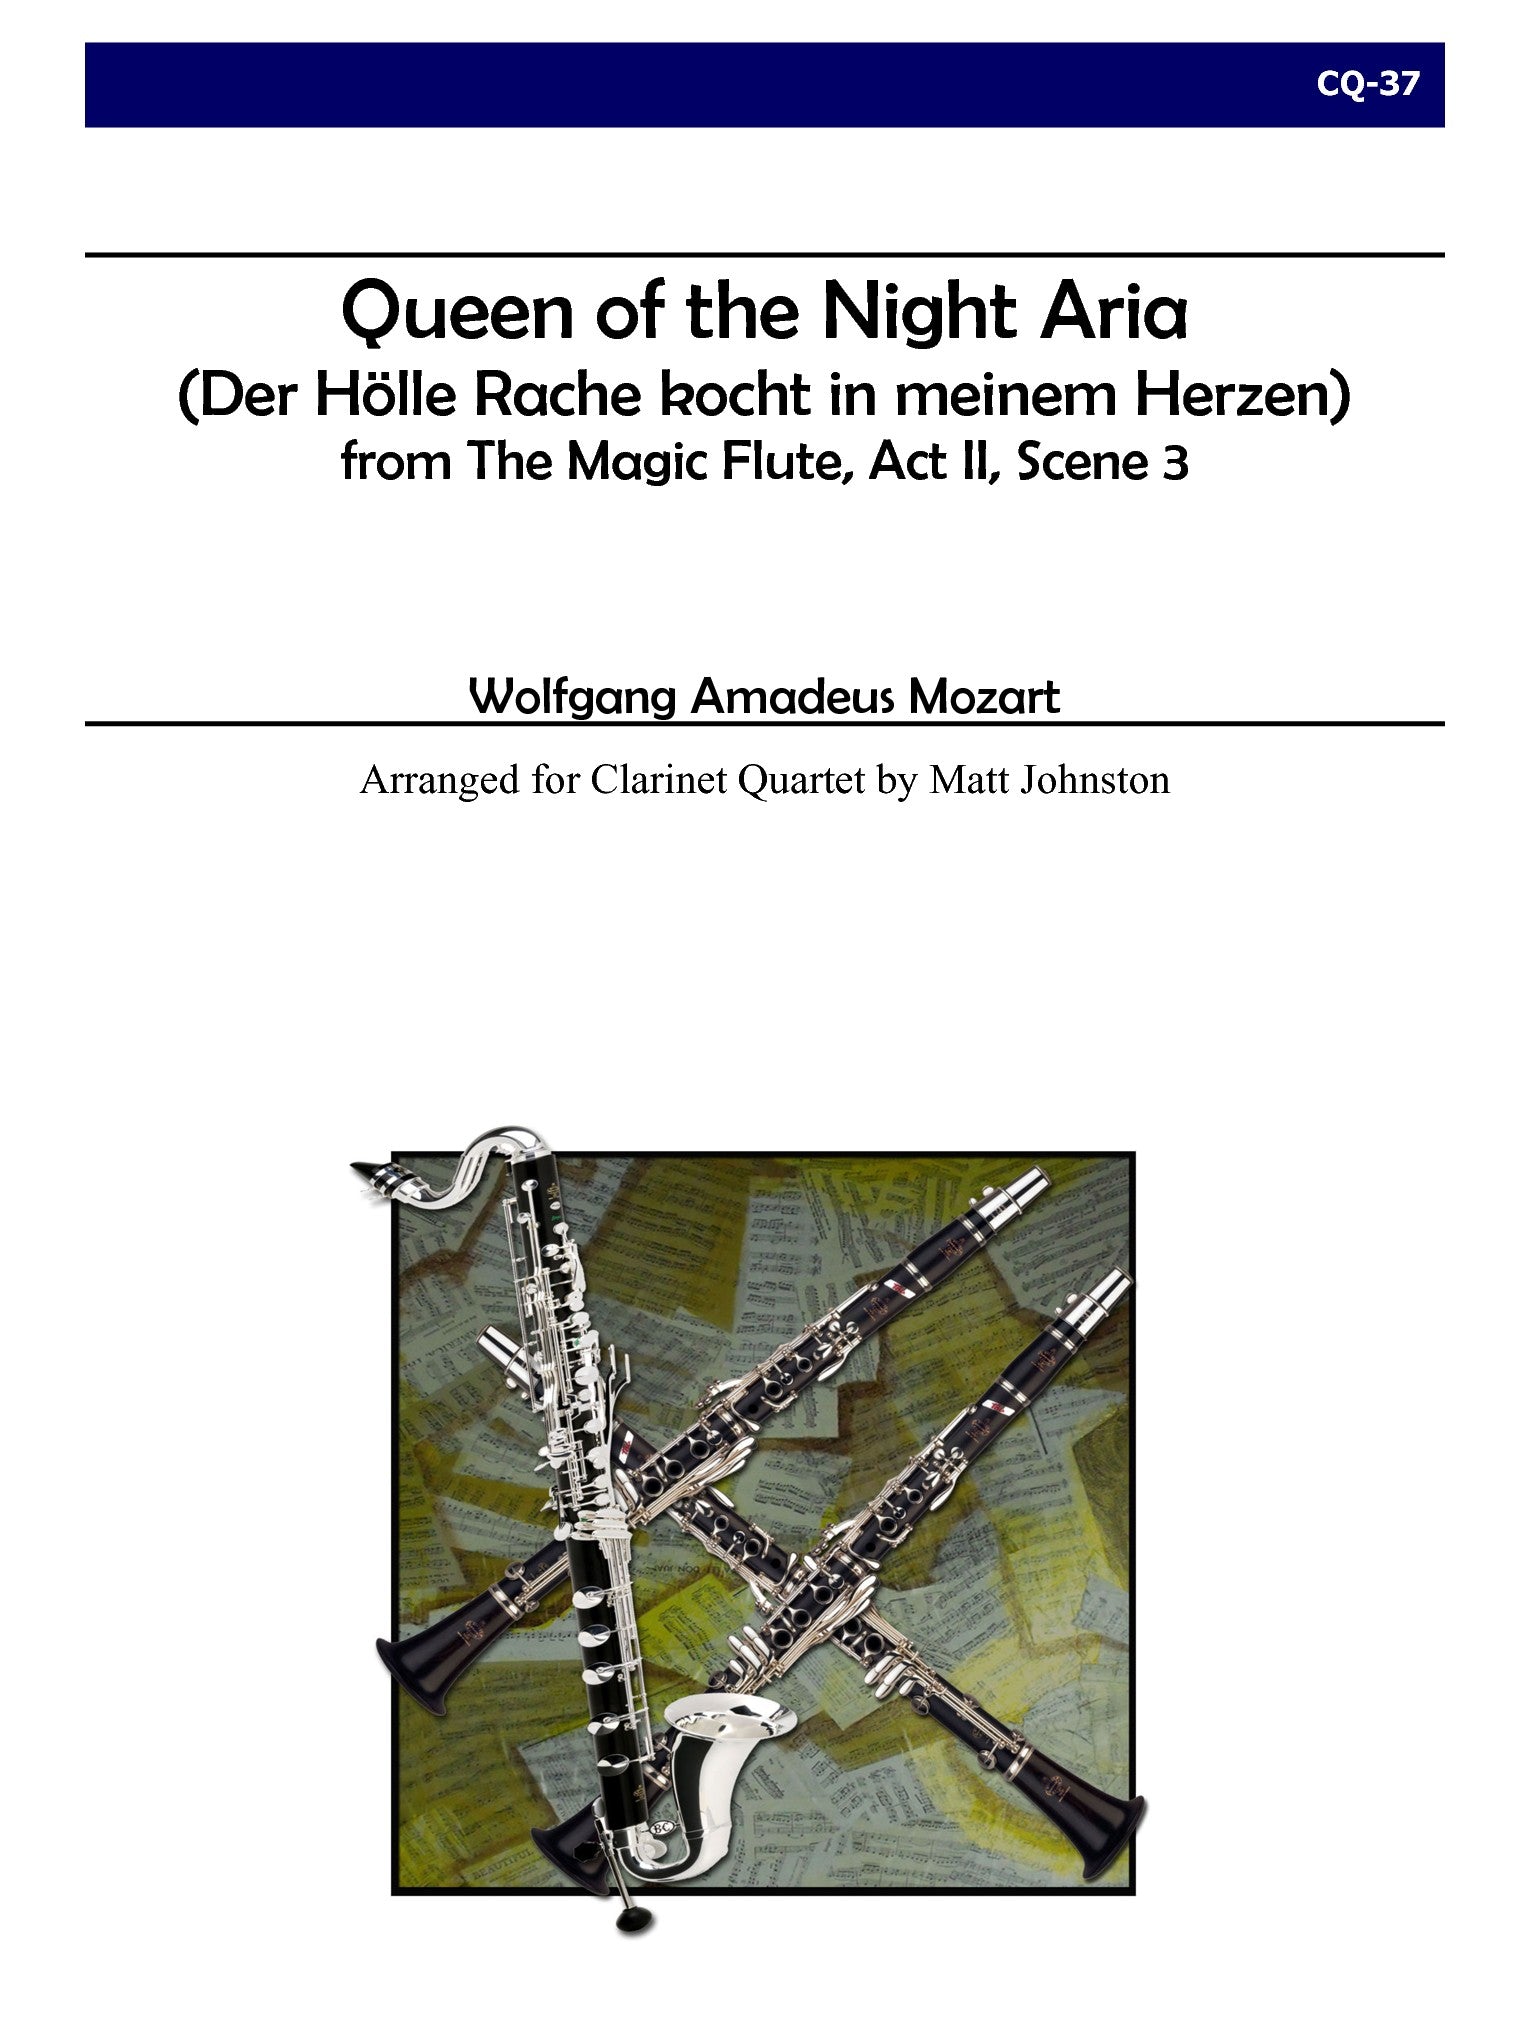 Mozart (arr. Matt Johnston) - Queen of the Night Aria for Clarinet Quartet